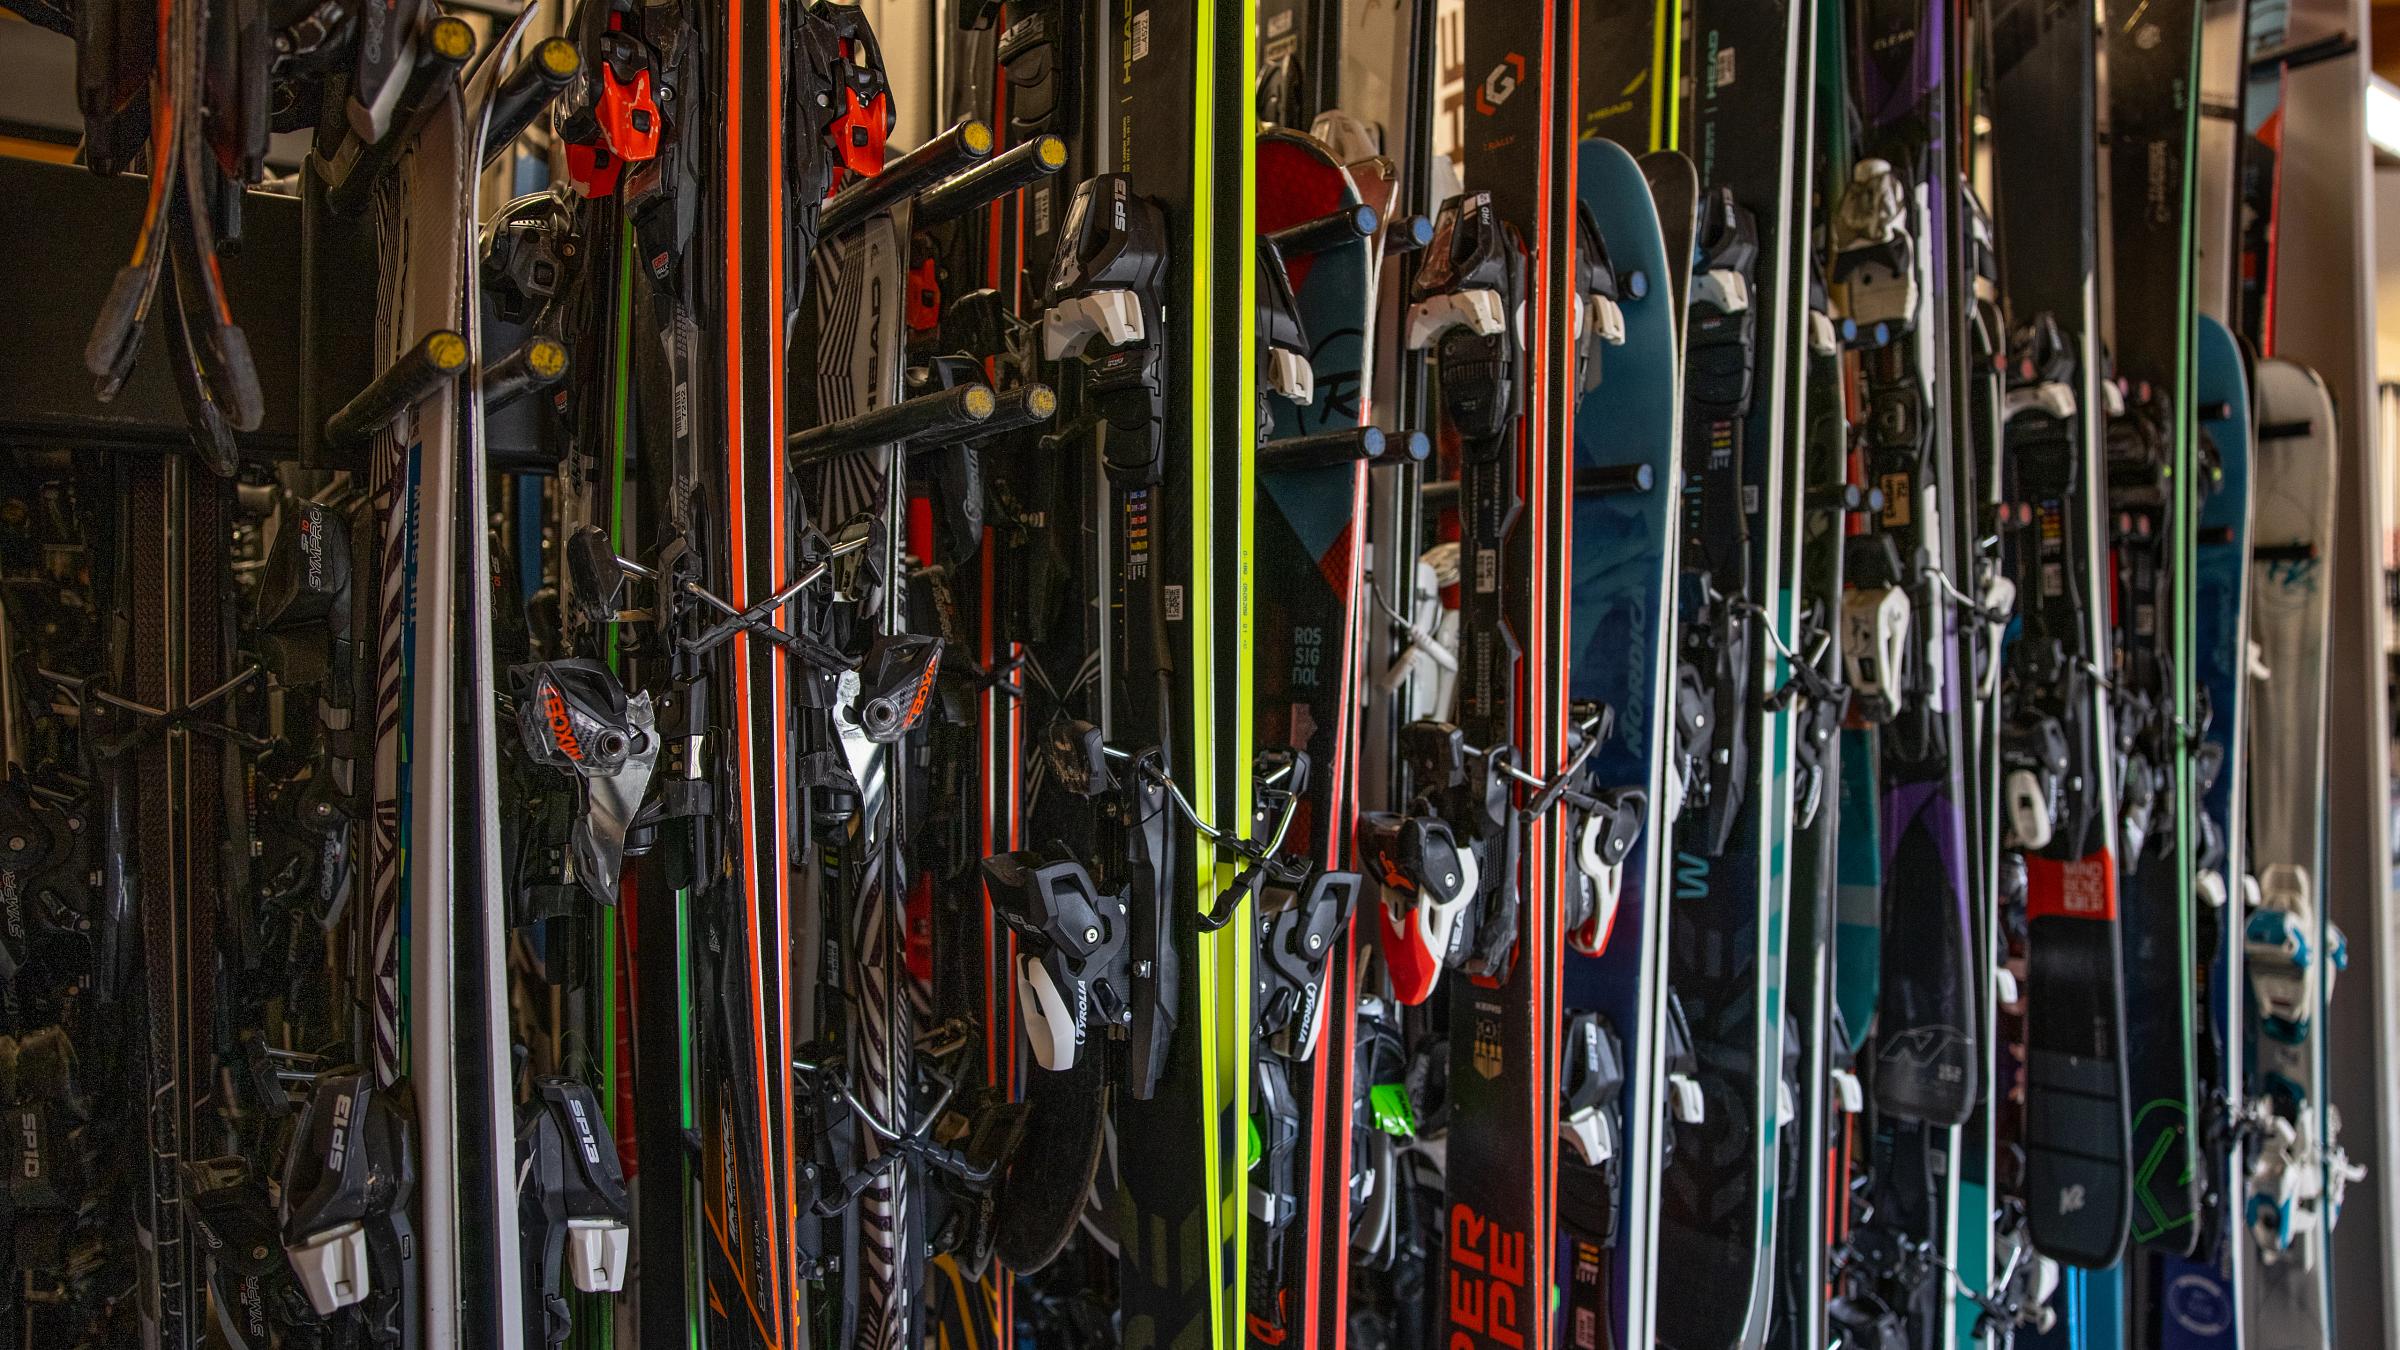 Skis hanging on racks.